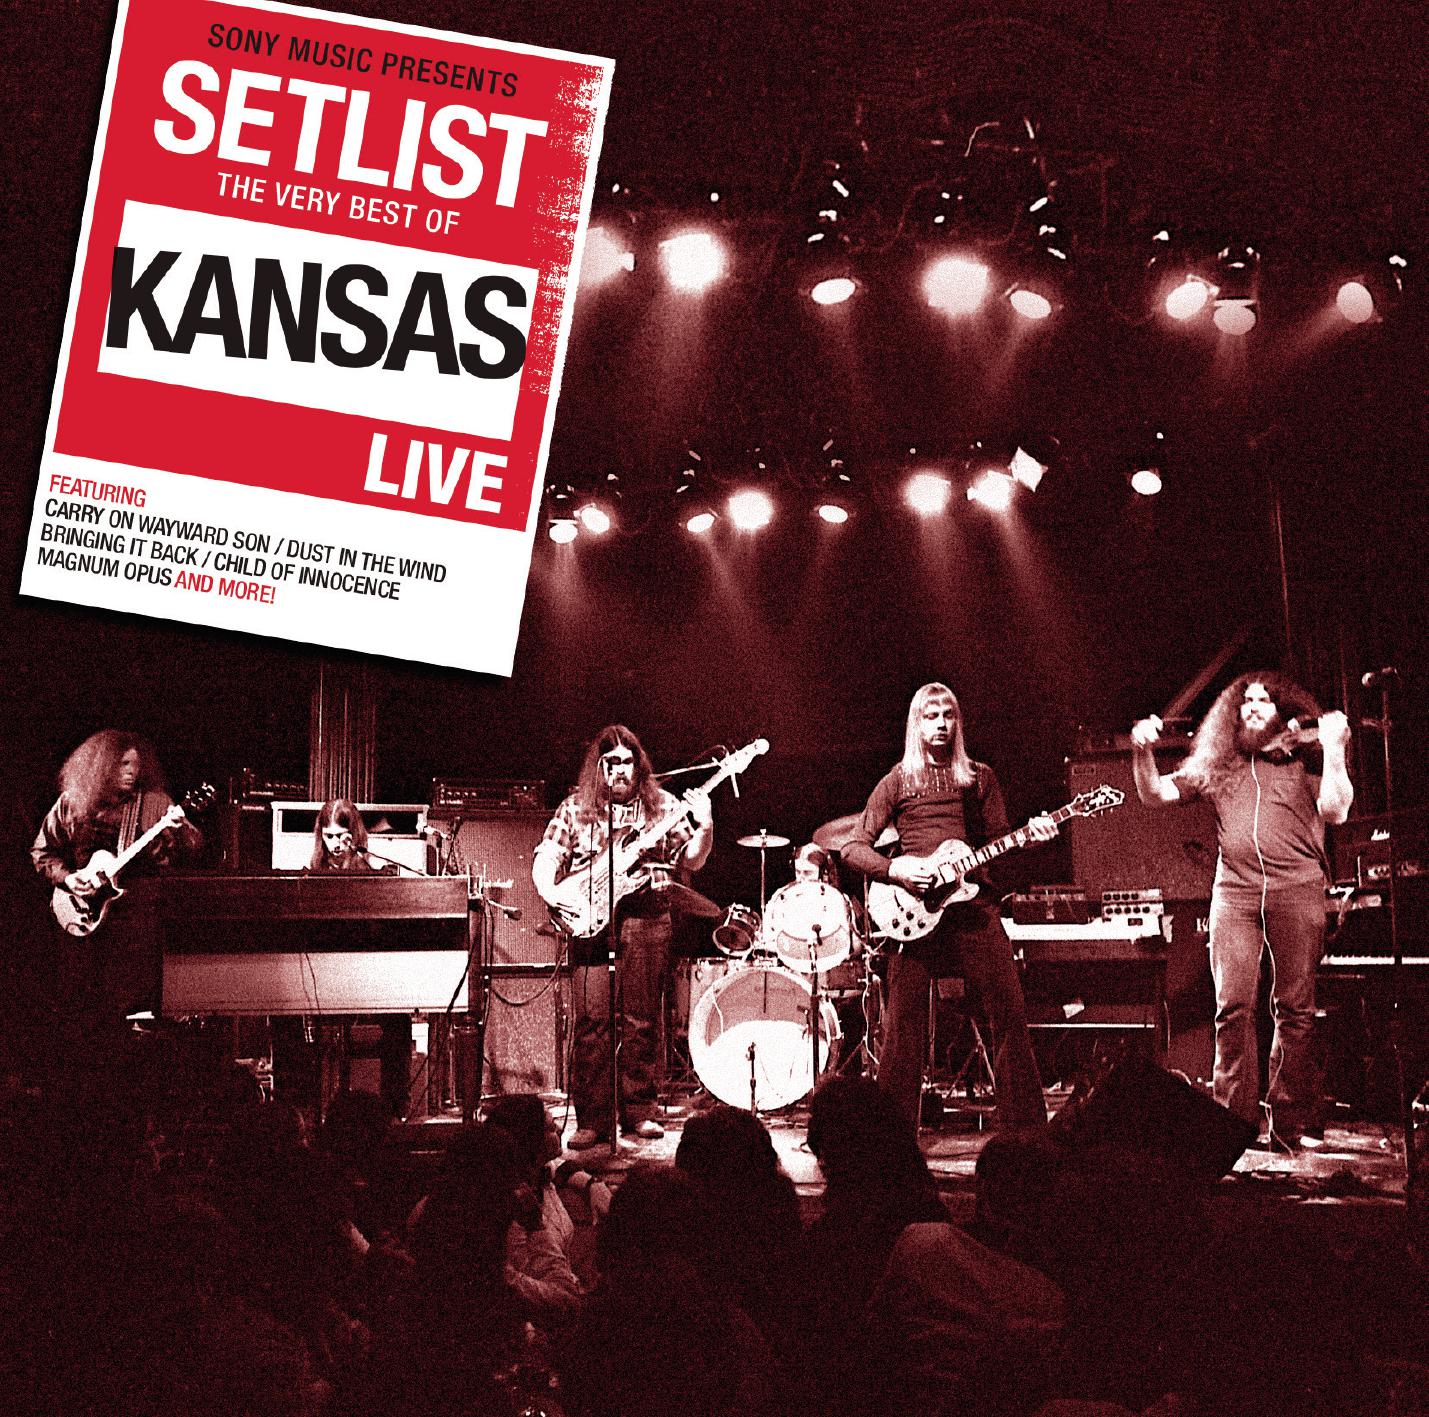 Setlist: The Very Best Of Kansas LIVE